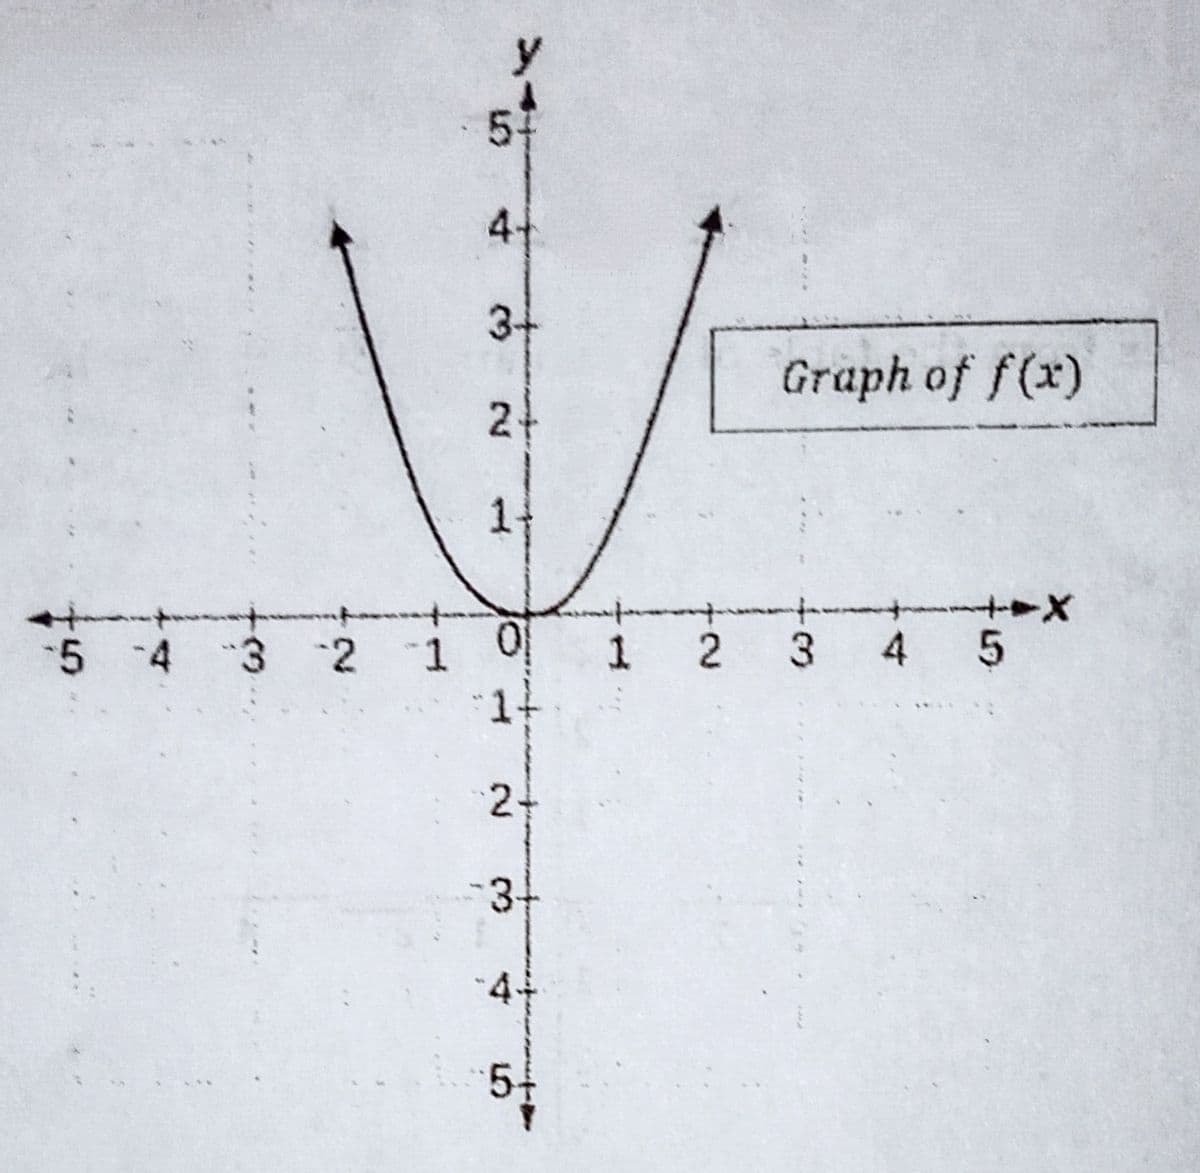 y
57
4+
3+
Graph of f(x)
1-
ナ +ャX
十
-54 3 2 1
小→.
1 2 3 4 5
3+
4.
5-
2.
2.
